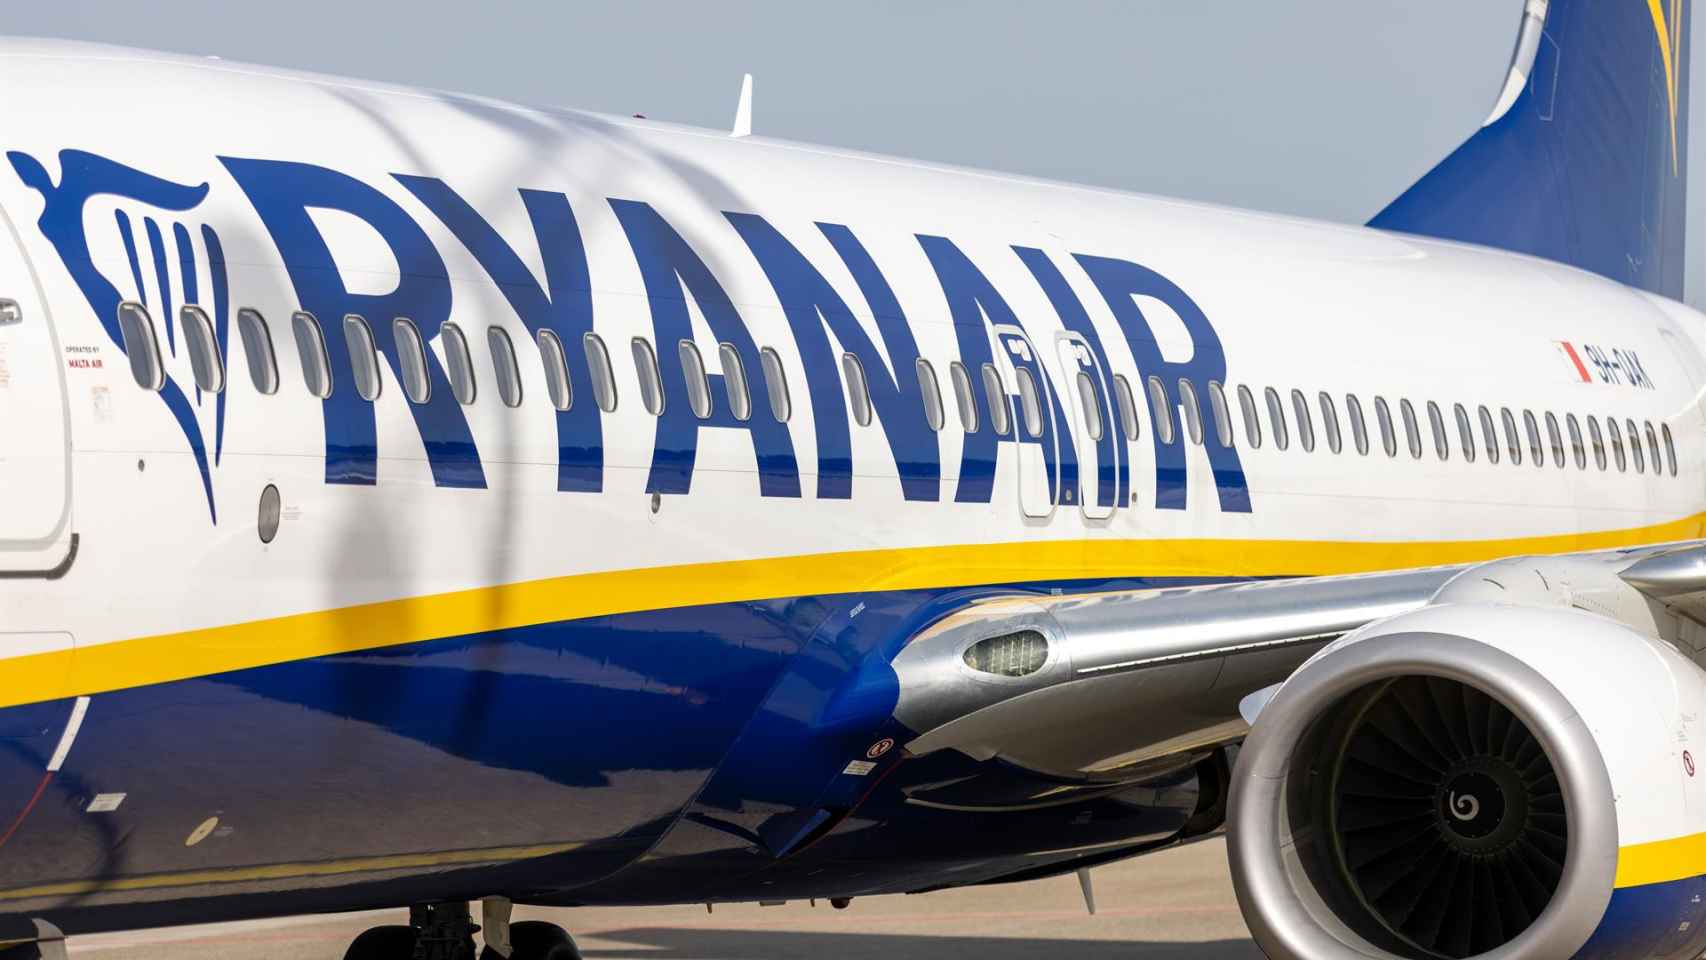 Un avión de Ryanair / EUROPA PRESS - Daniel Karmann/dpa